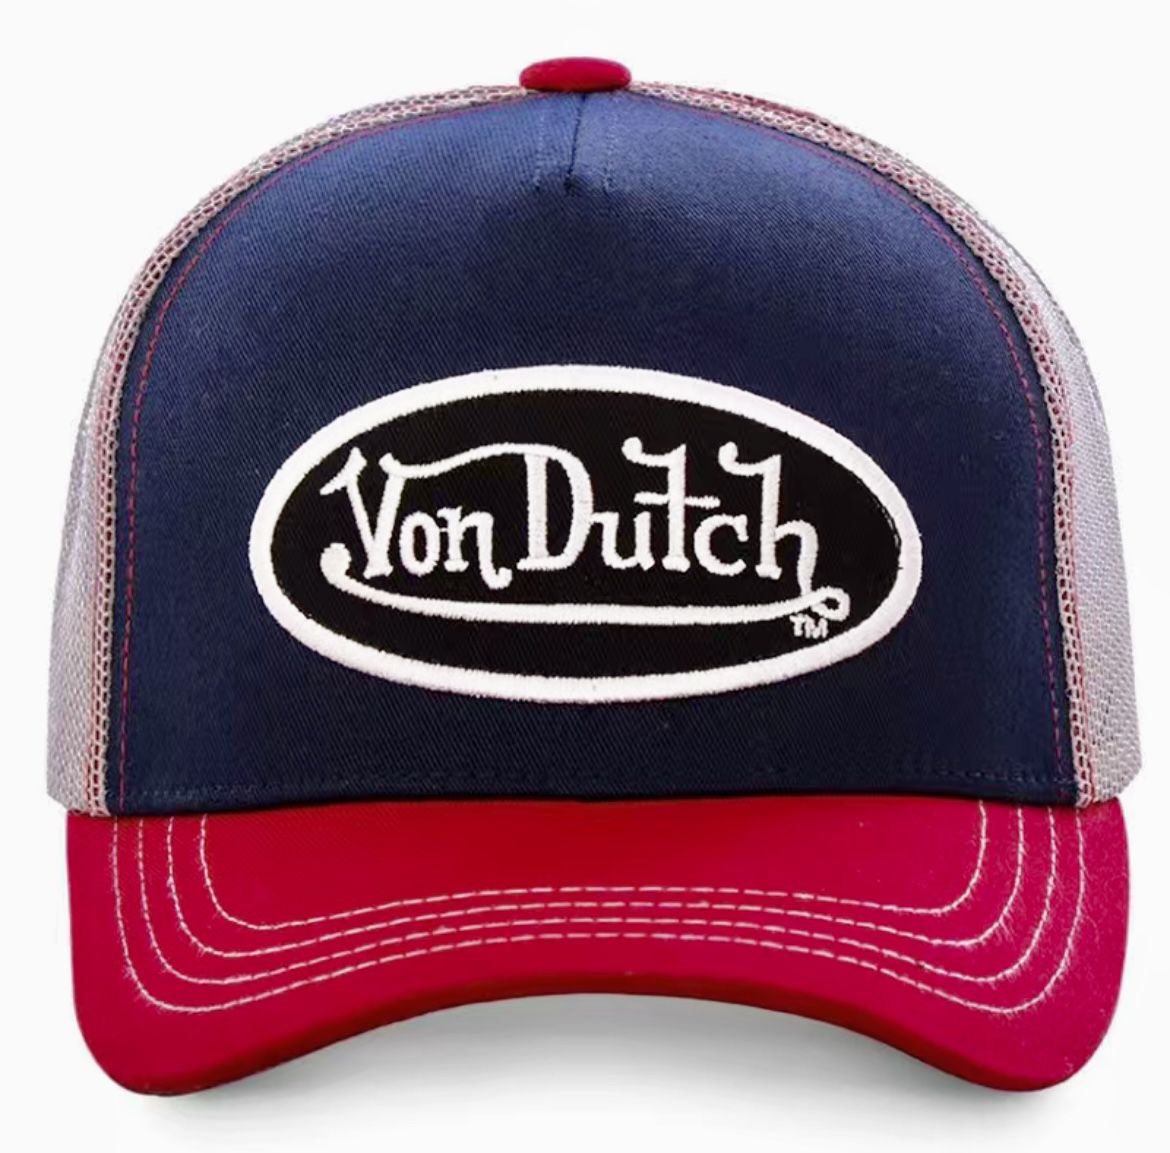 Van Dutch Cap